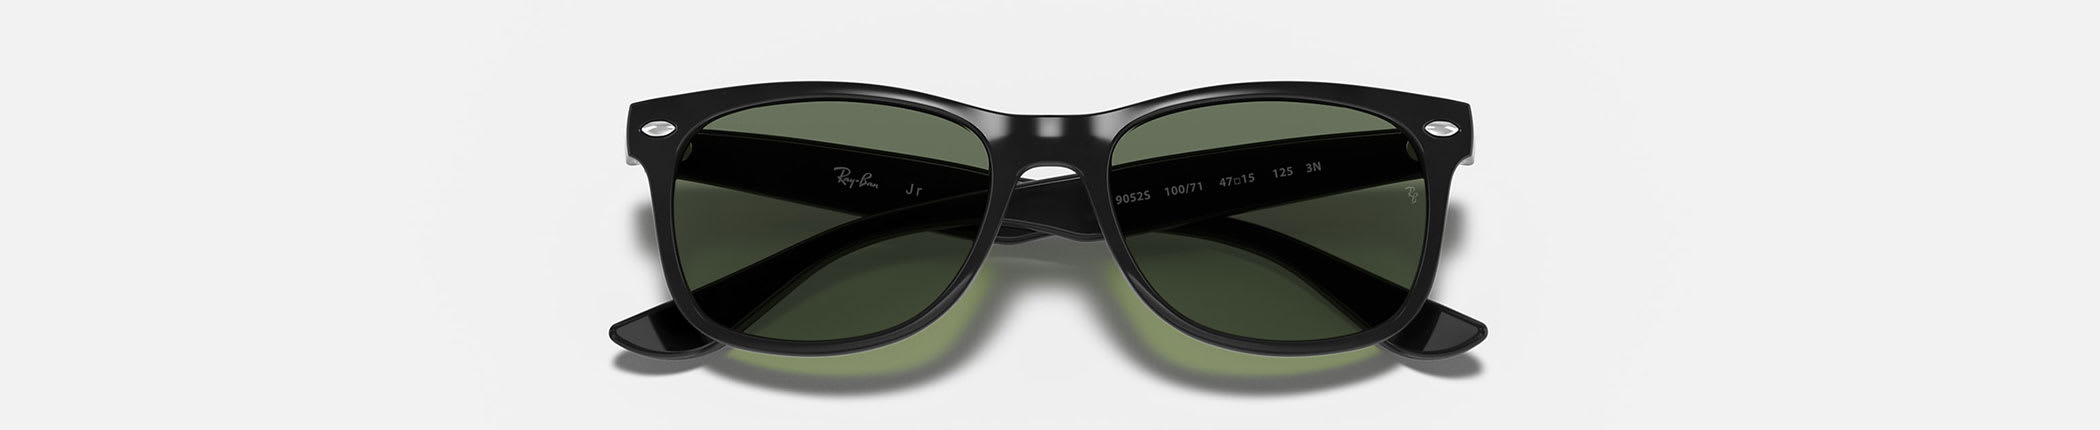 Shop Boys's Prescription Sunglasses - featuring Ray-Ban Junior RJ9052S New Wayfarer